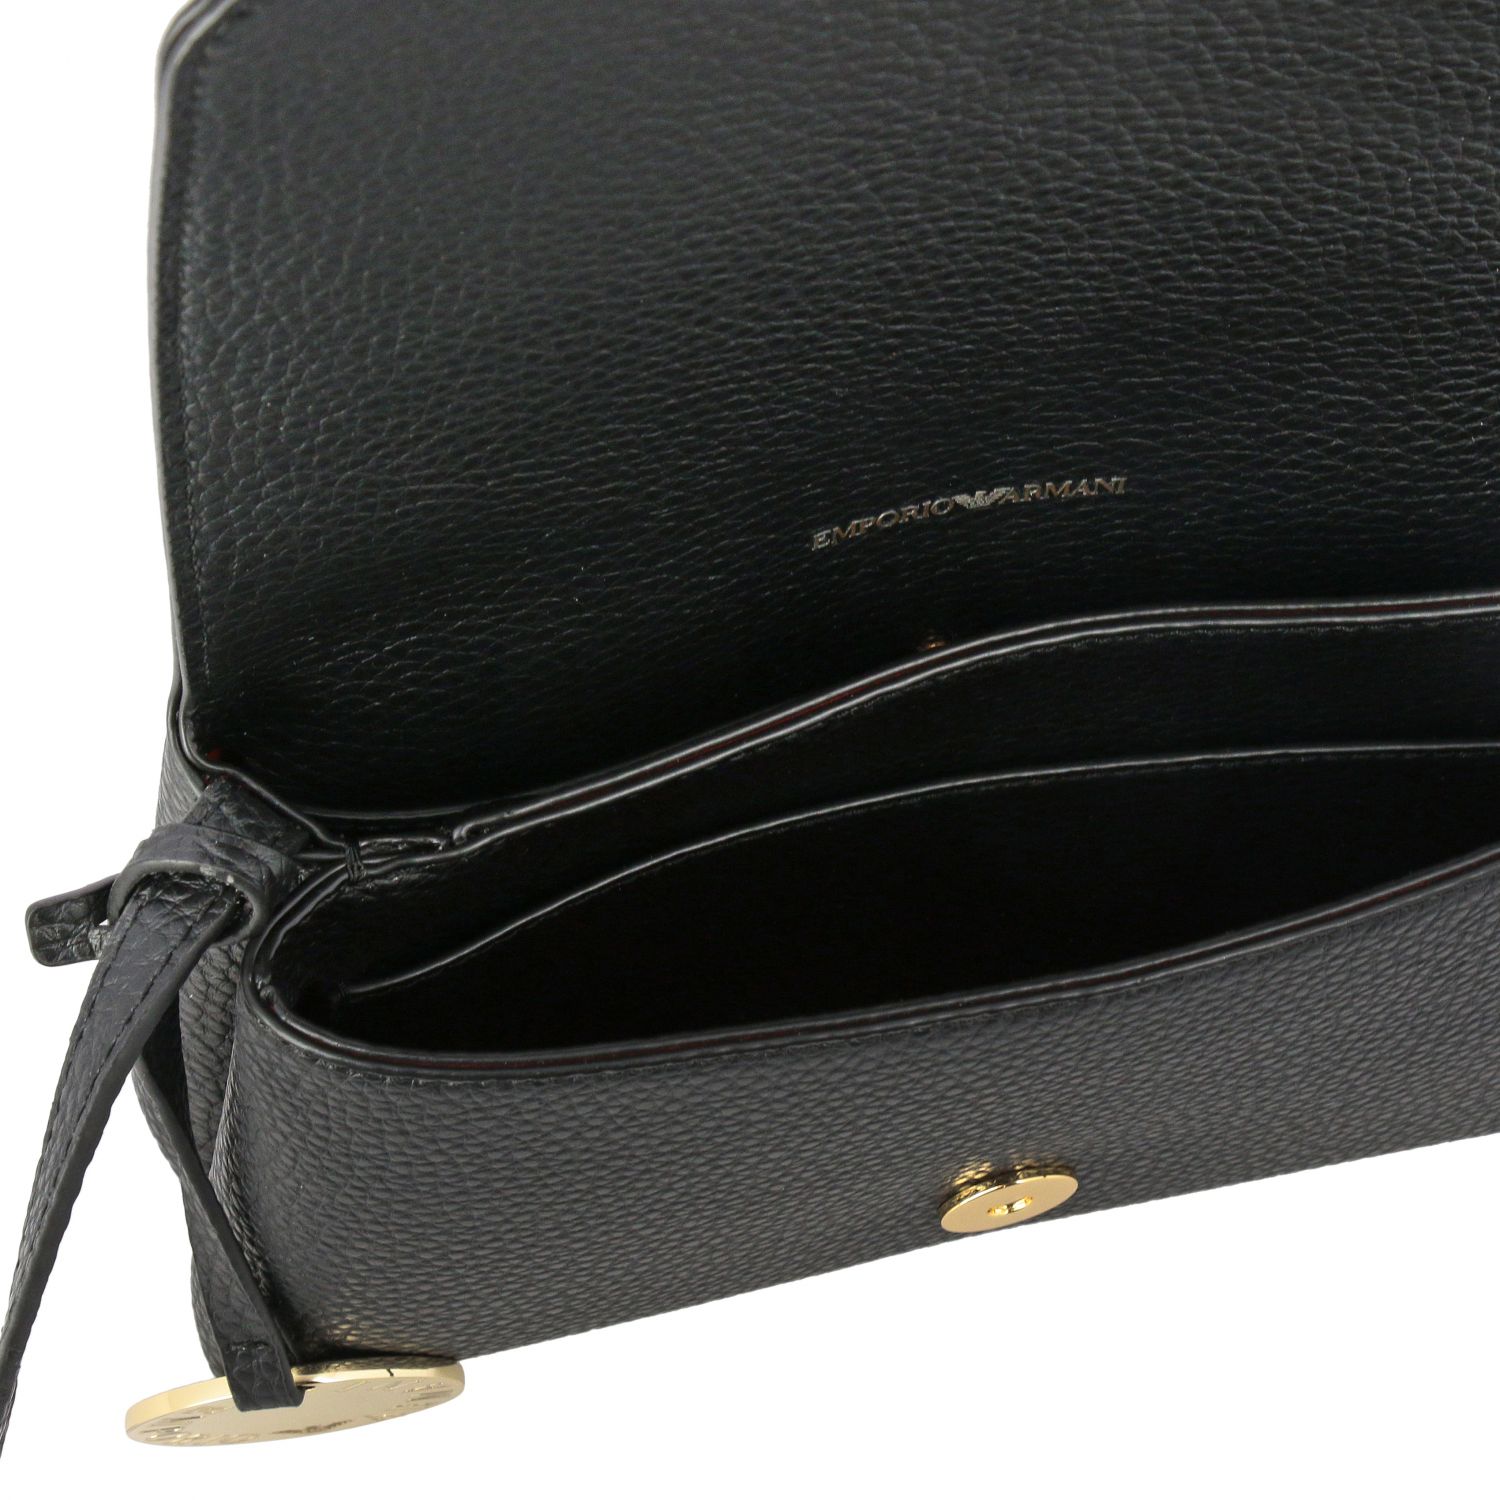 Emporio Armani Outlet: mini bag for women - Black | Emporio Armani mini ...